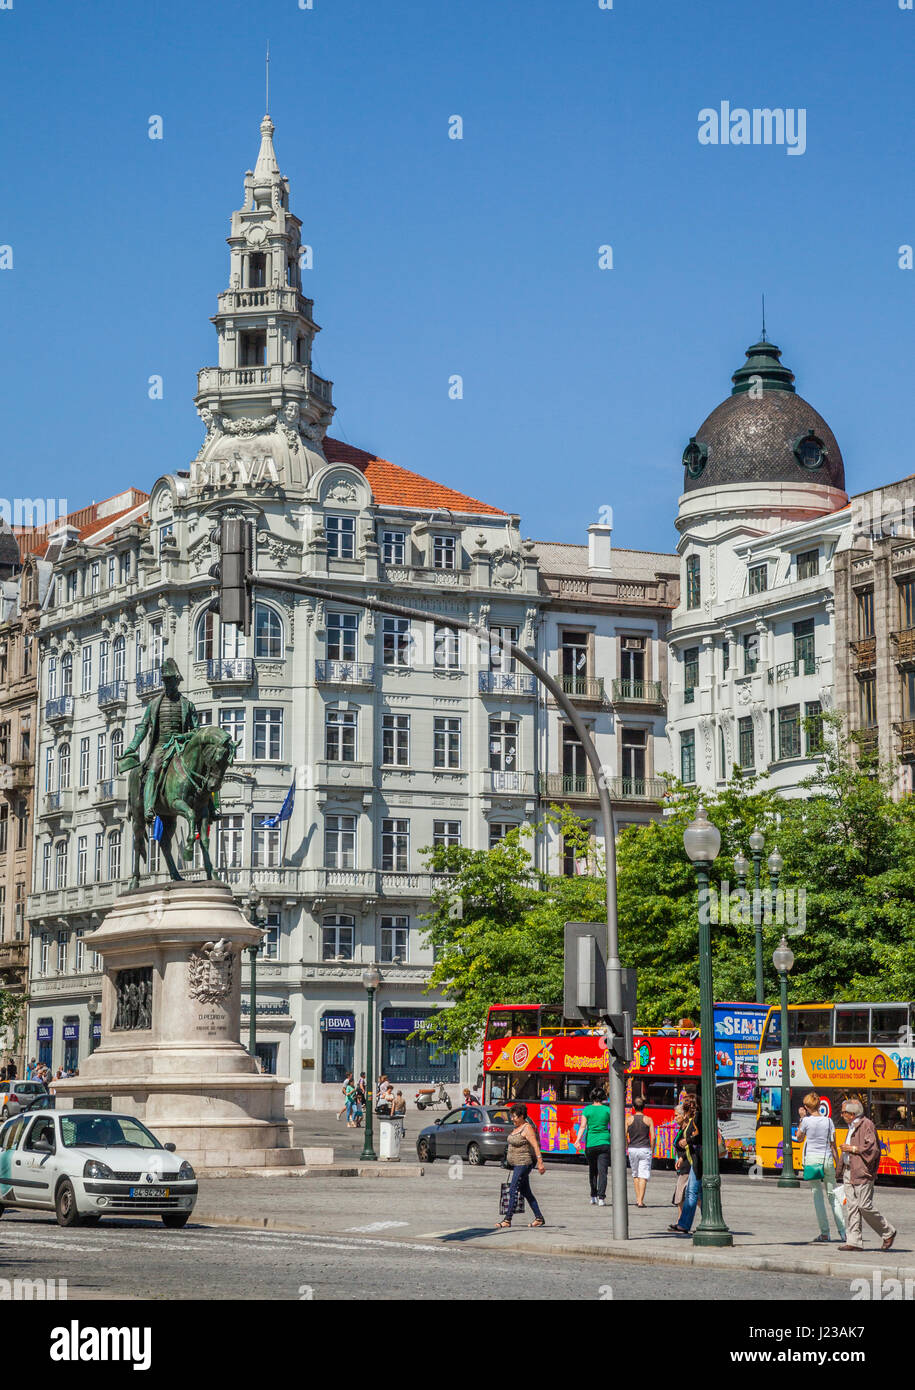 Portugal, Region Norte, Porto, view of Avenida dos Aliagos from  Praca da Liberdade, with equestrian statue of King Peter IV (Dom Pedro IV), against t Stock Photo